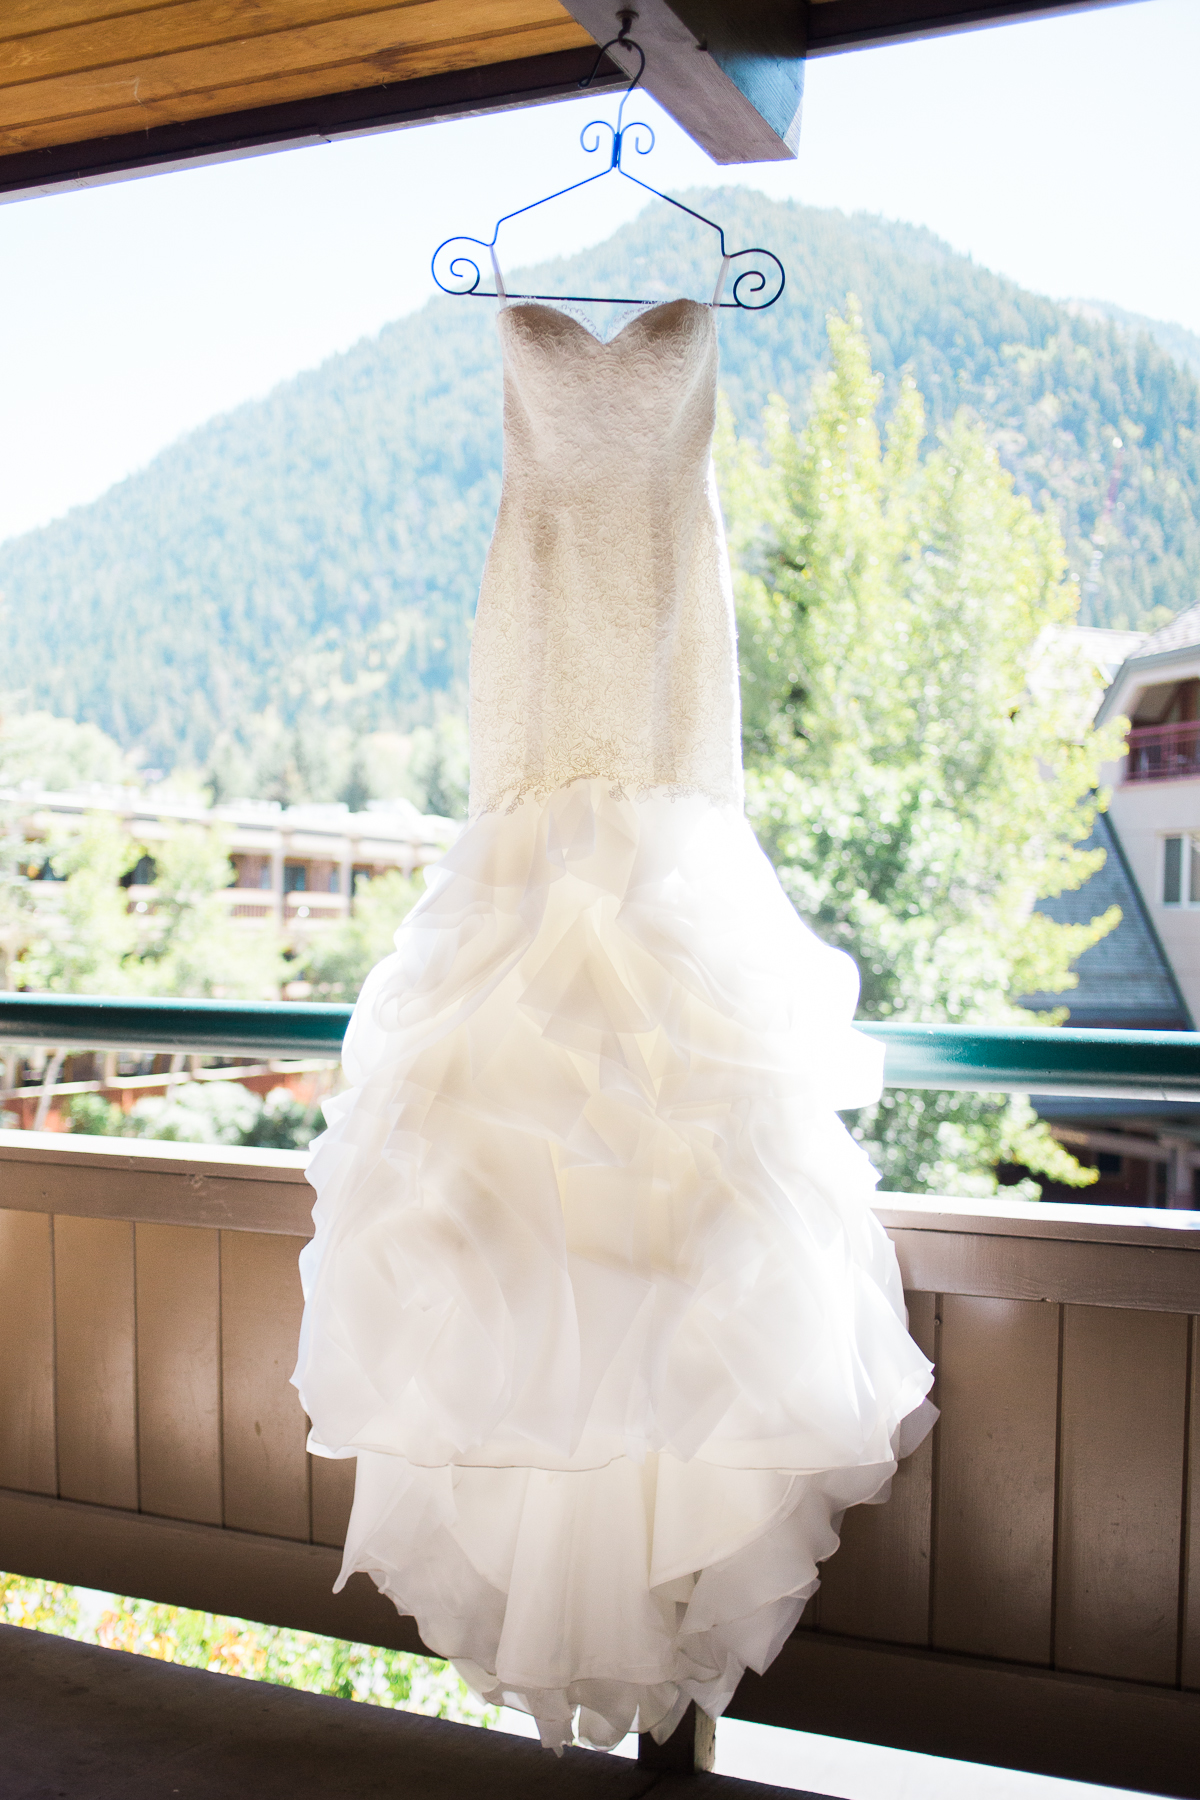  Aspen Art Museum Wedding | Wedding Dress from Little White Dress in Denver | Amy Bluestar Photography 